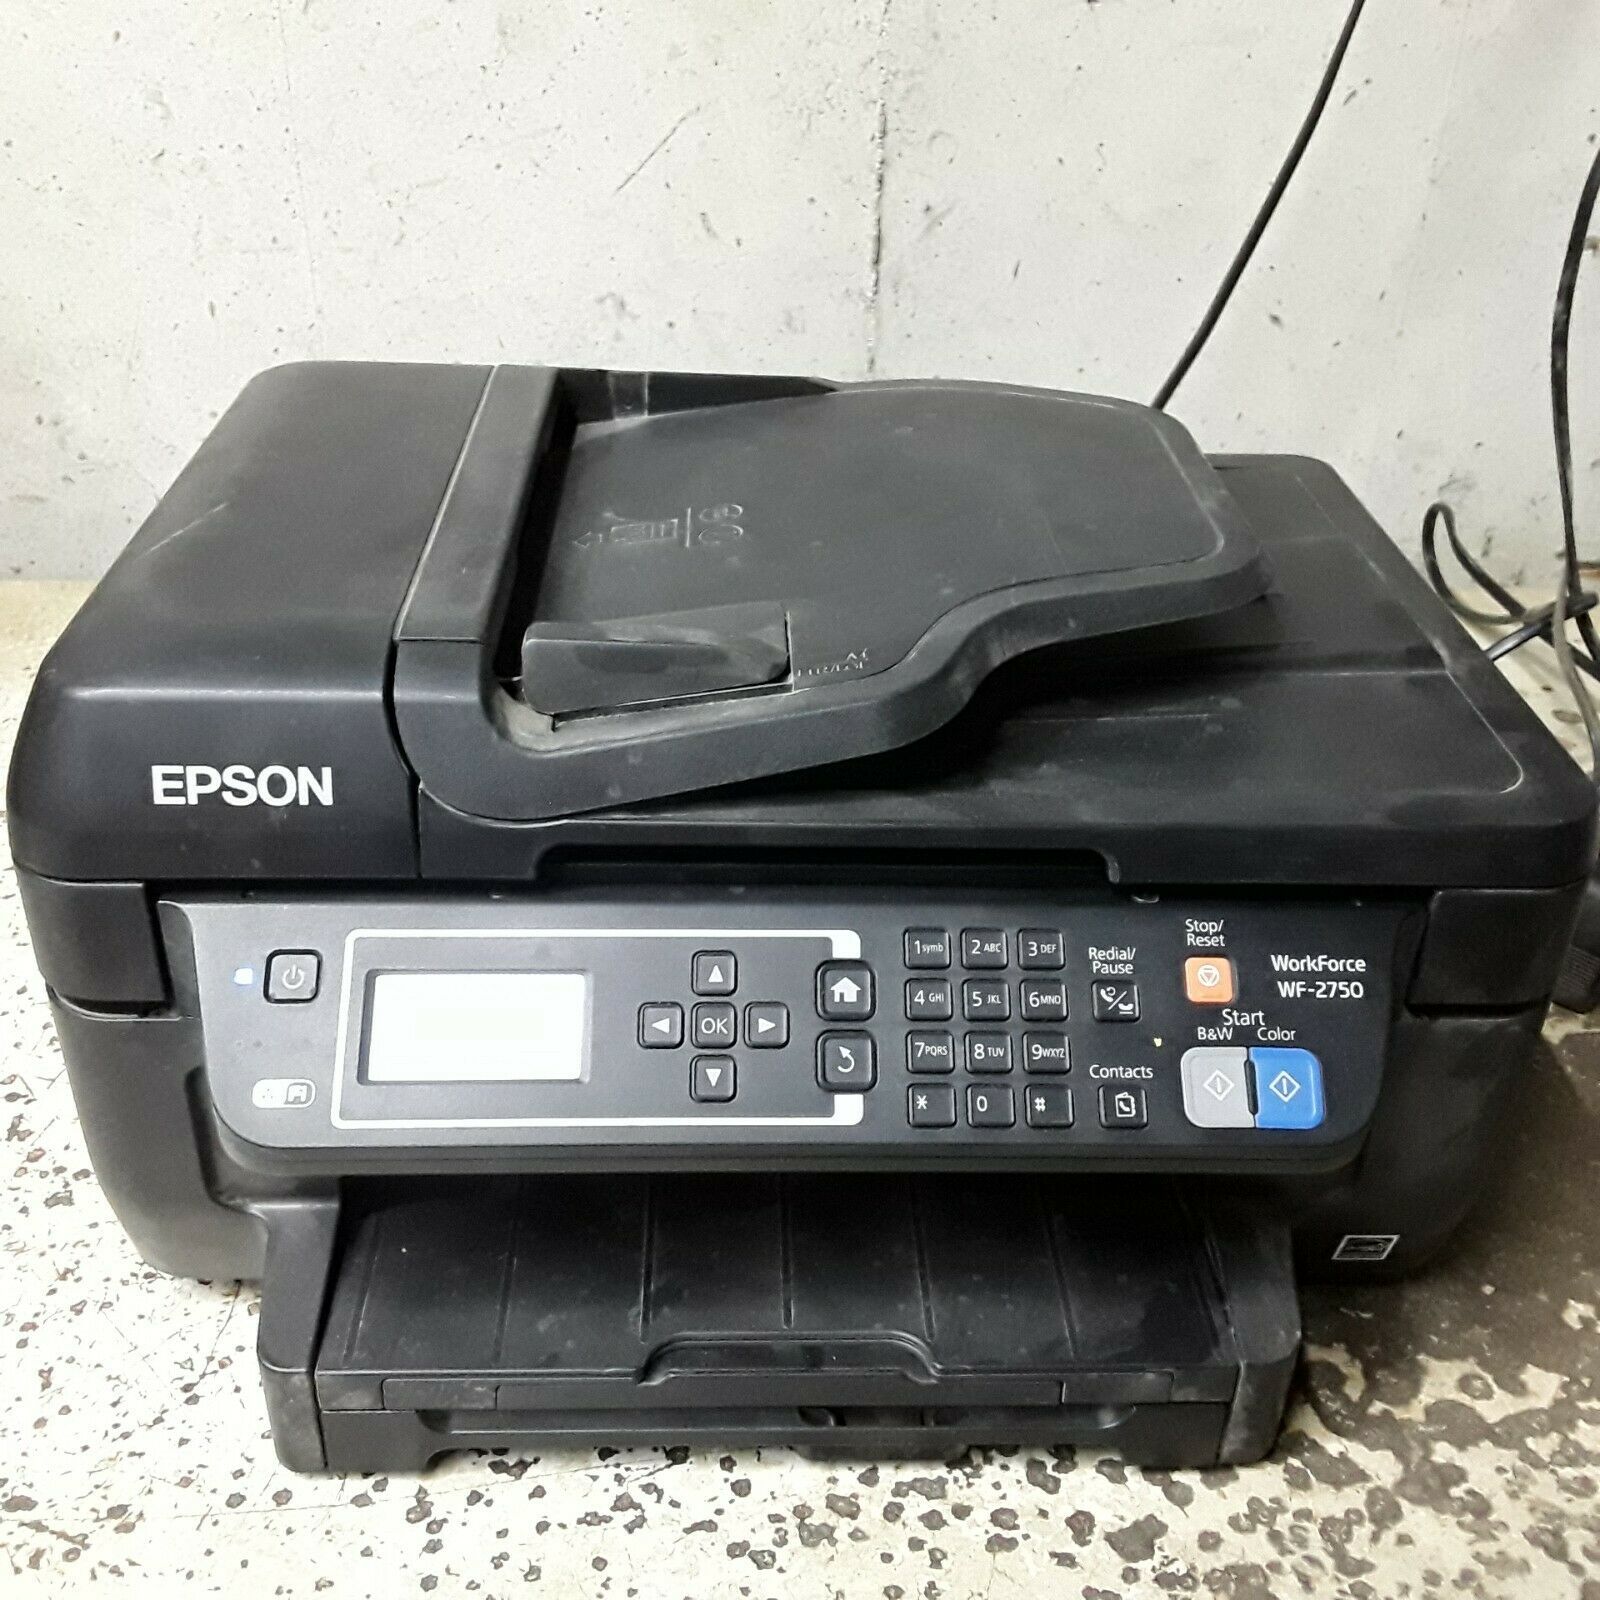 Epson Workforce Wf 2750 All In One Printer For Parts Or Repair Error 0xf4 Printers 2181